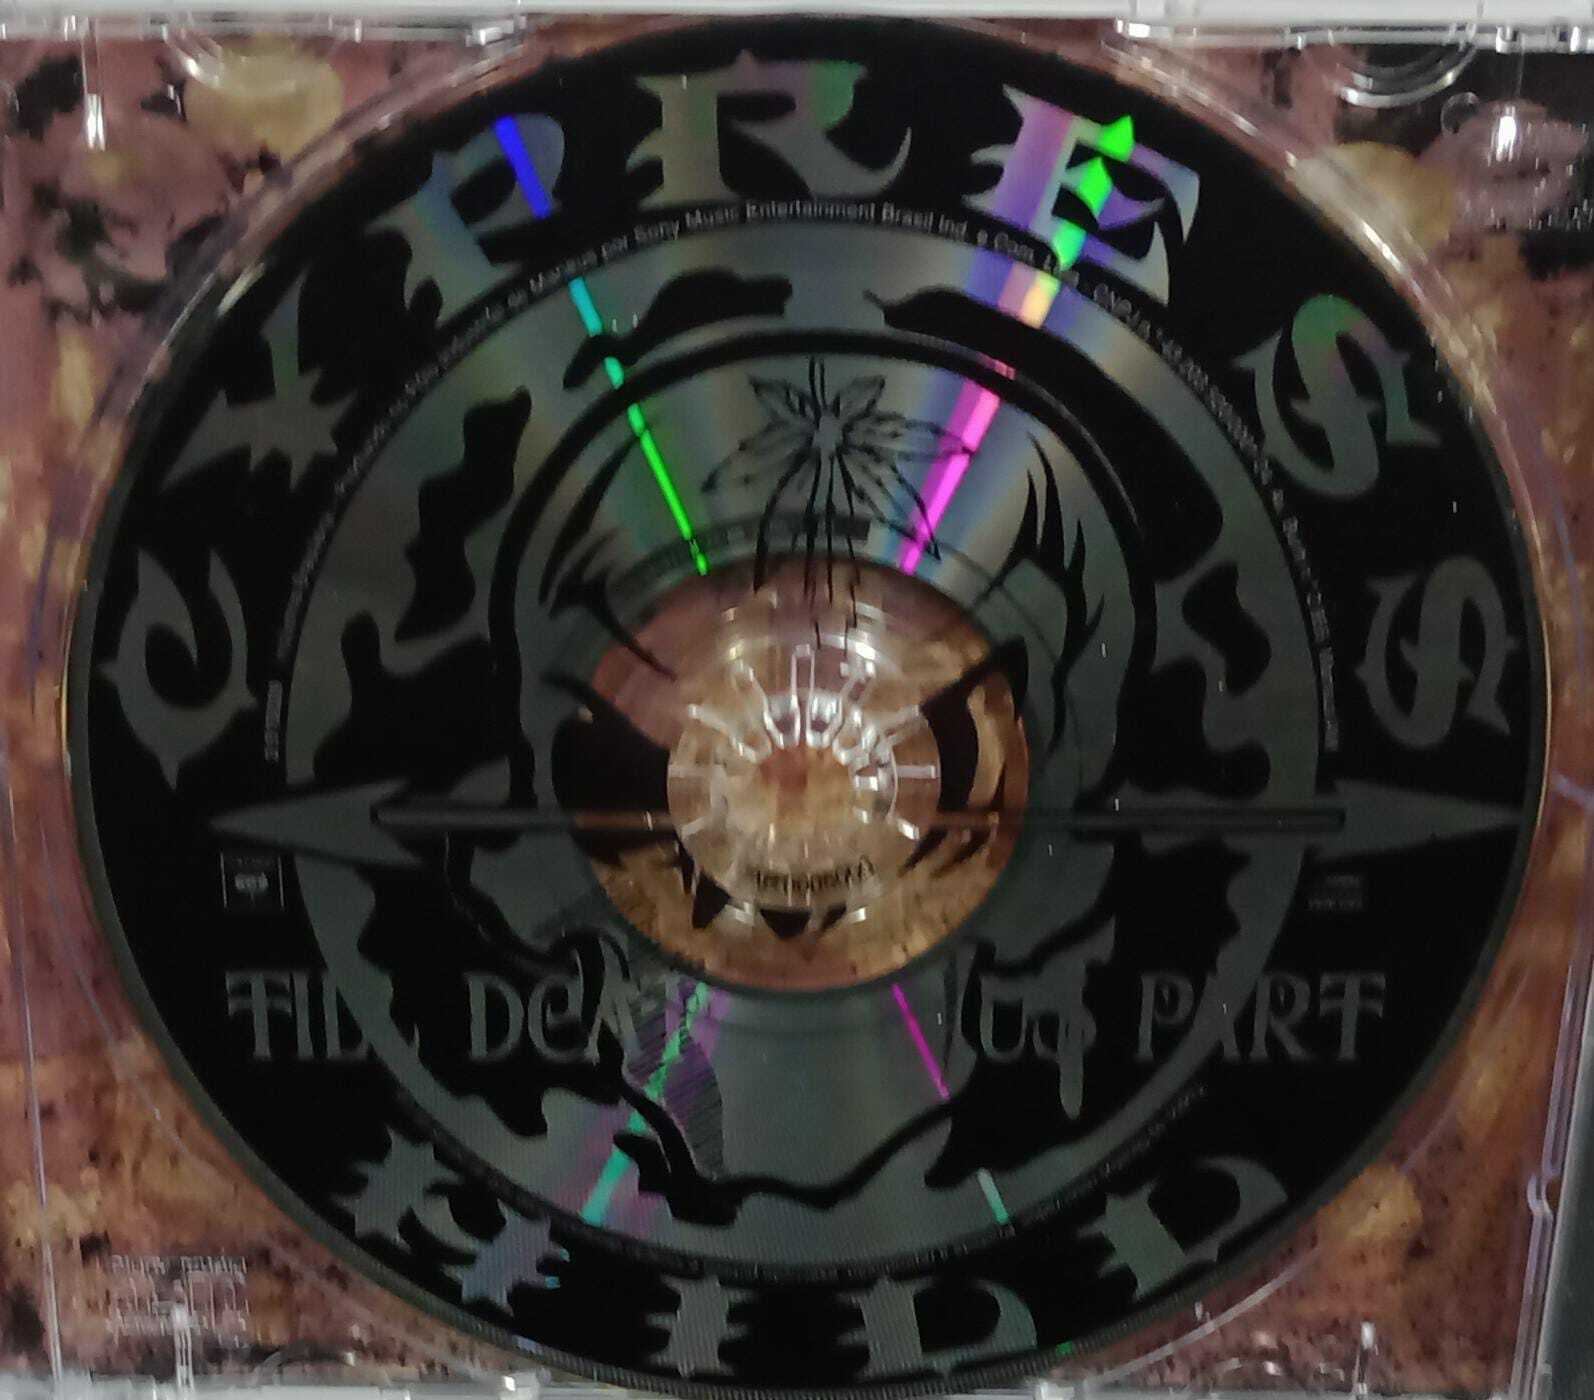 CD - Cypress Hill - Till Death Do Us Part